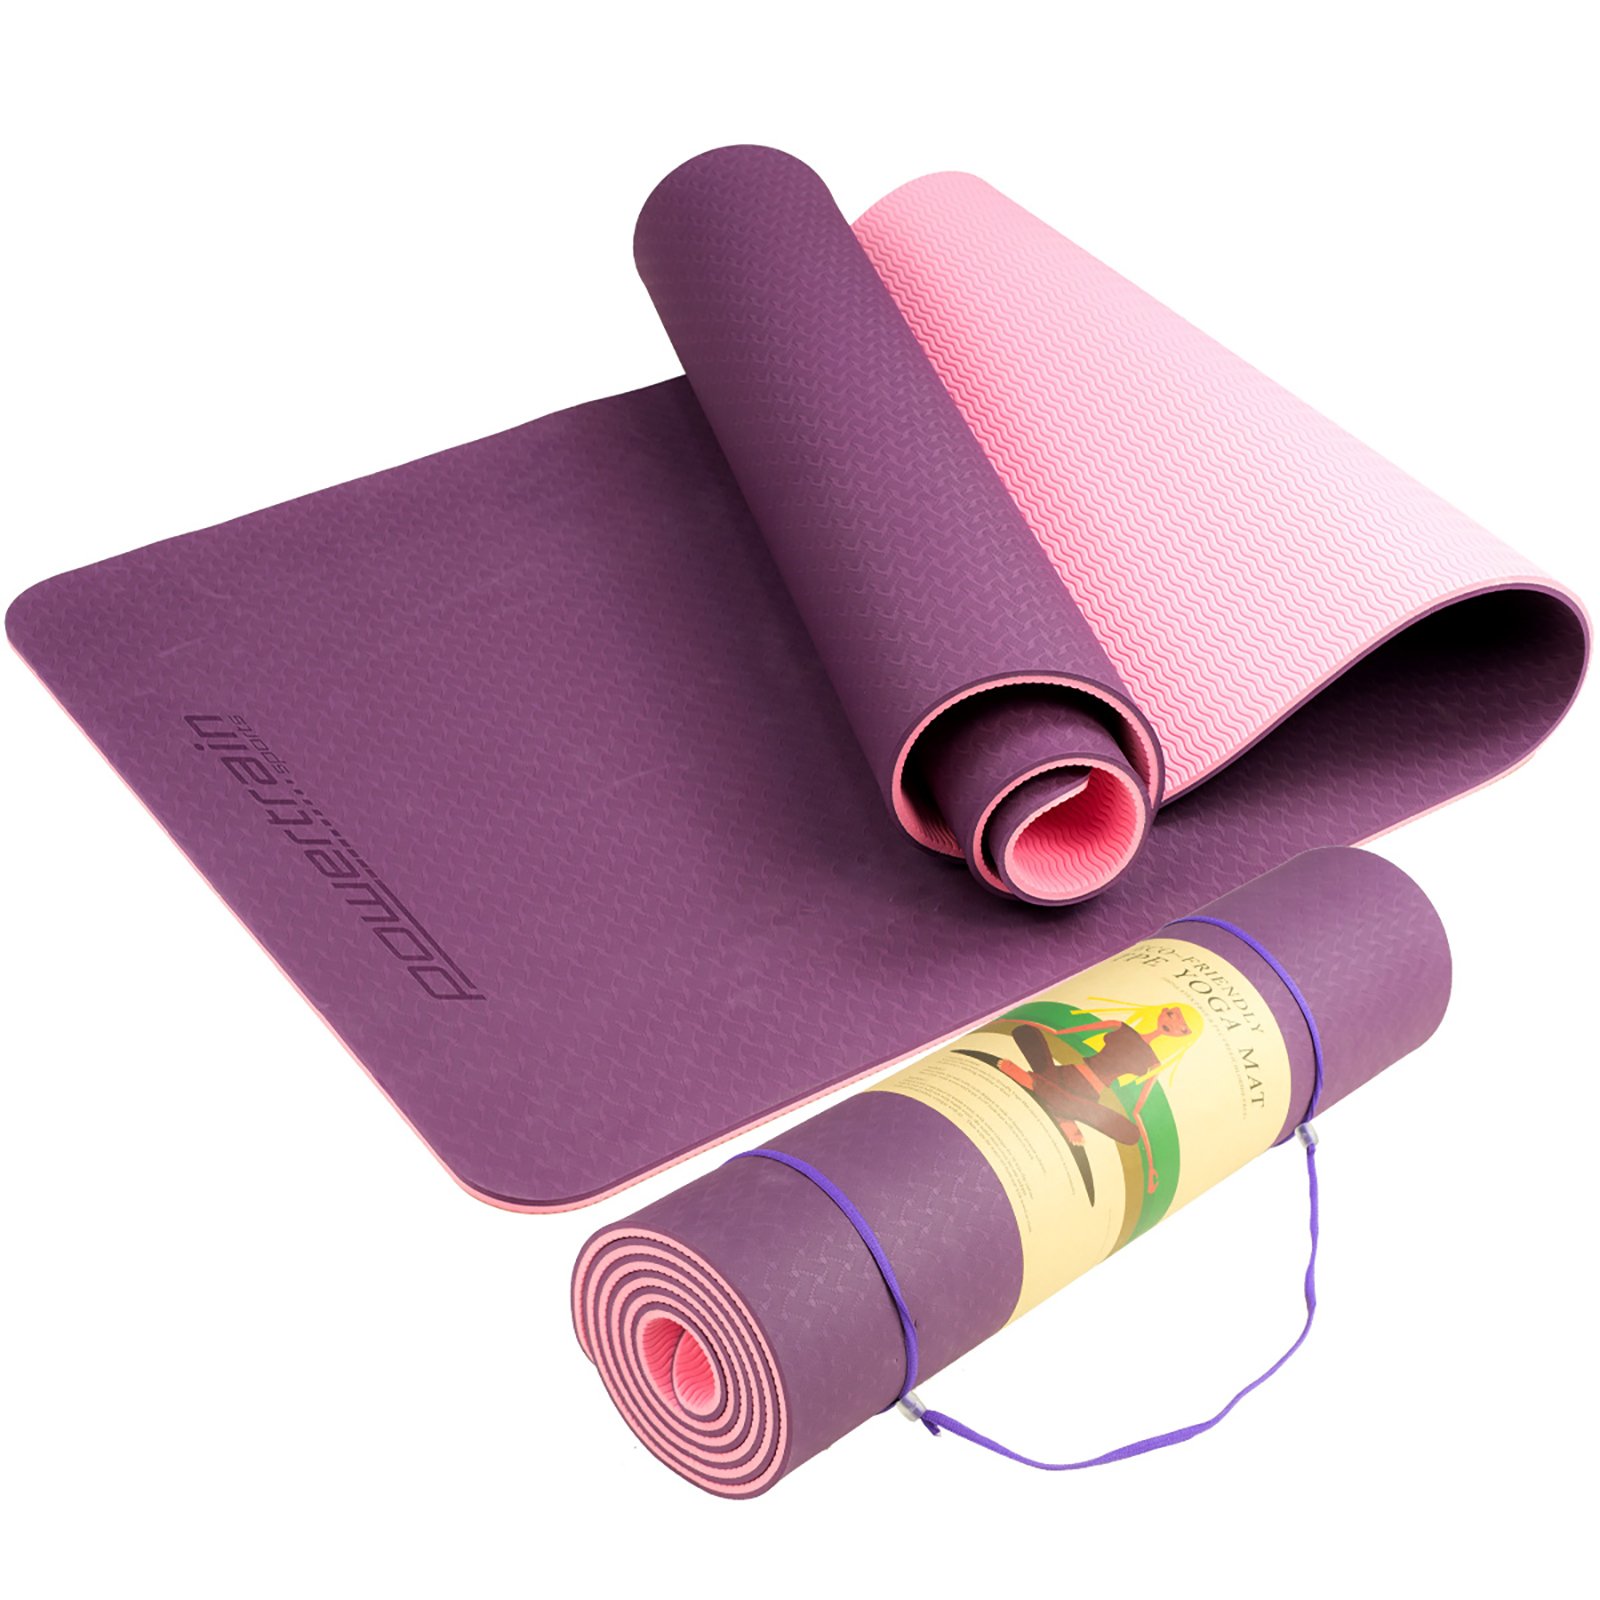 Powertrain Eco-Friendly TPE Pilates Exercise Yoga Mat 8mm - Dark Purple 1